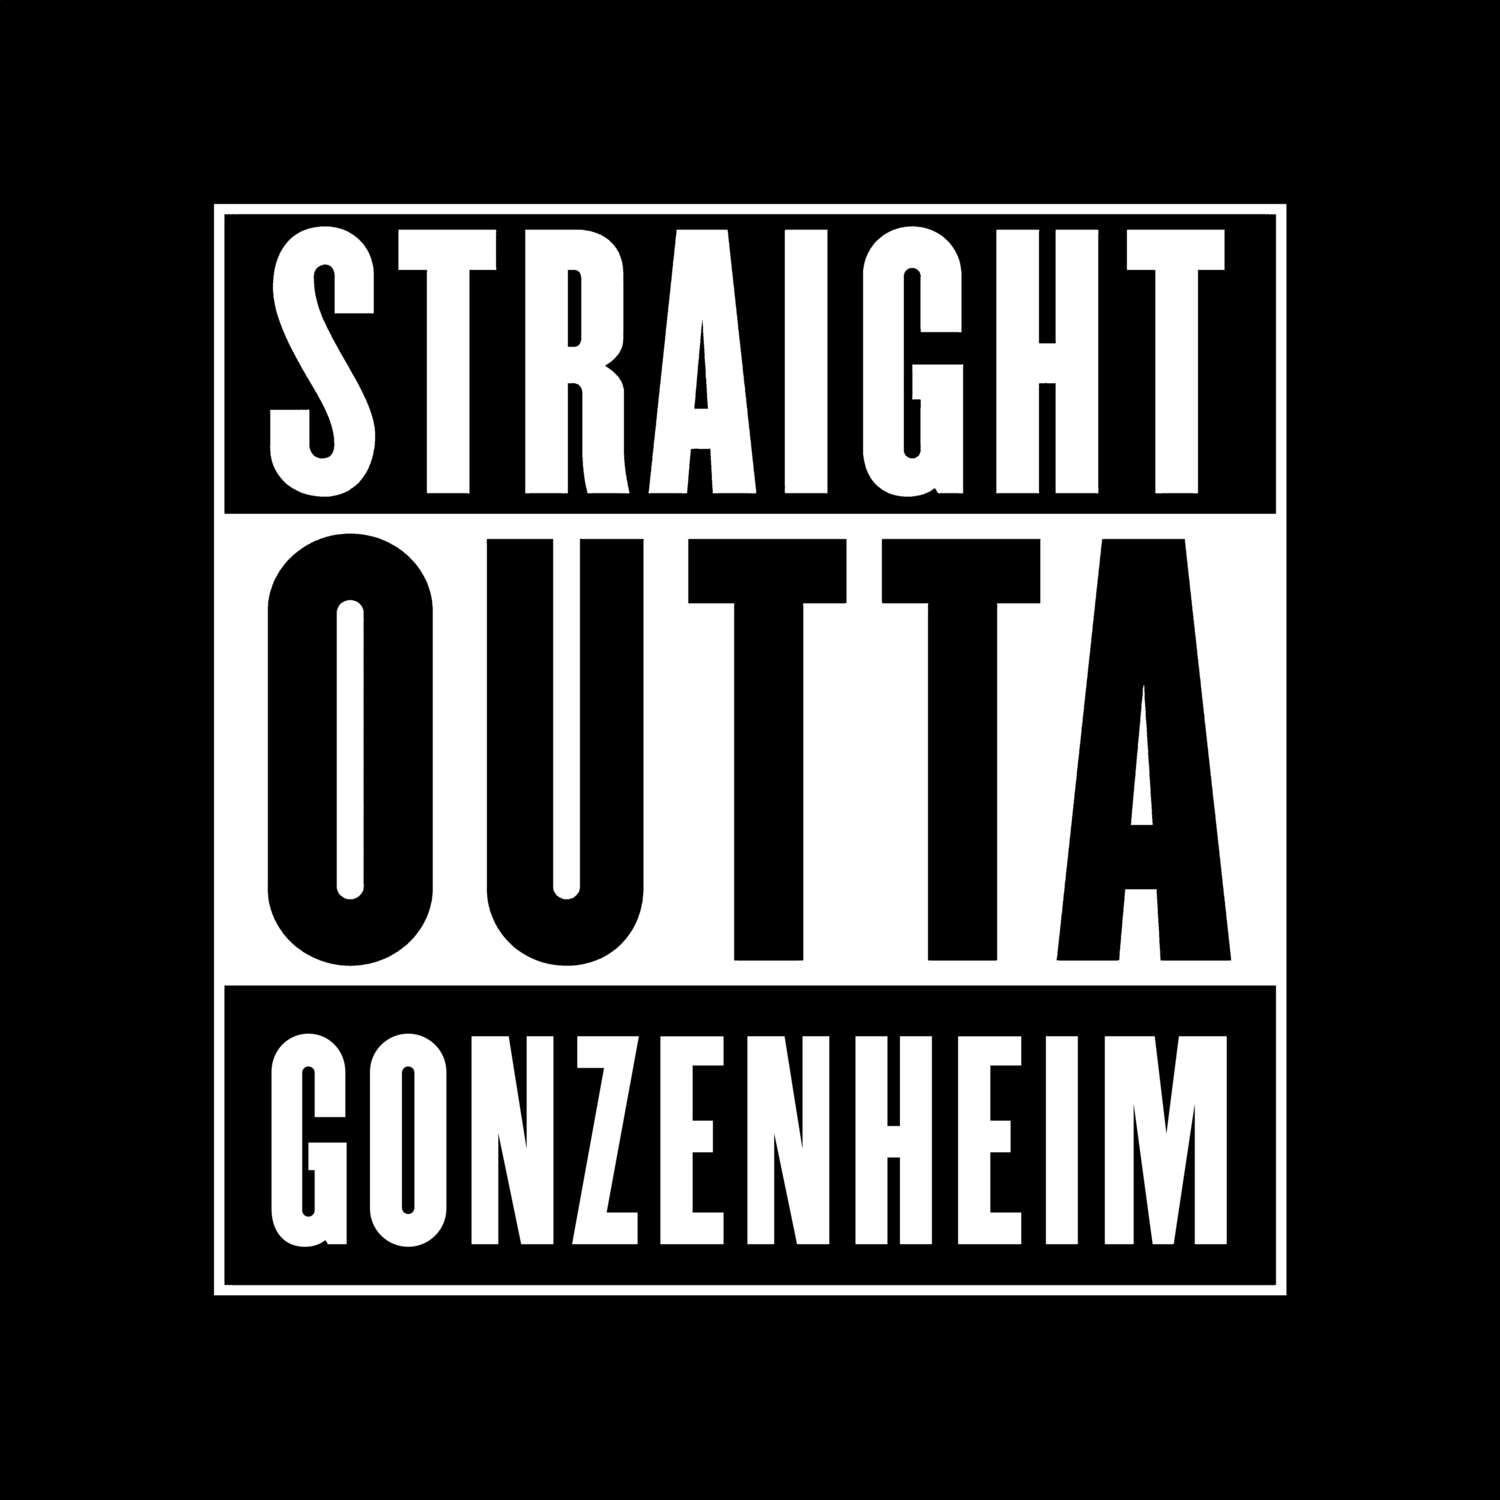 Gonzenheim T-Shirt »Straight Outta«